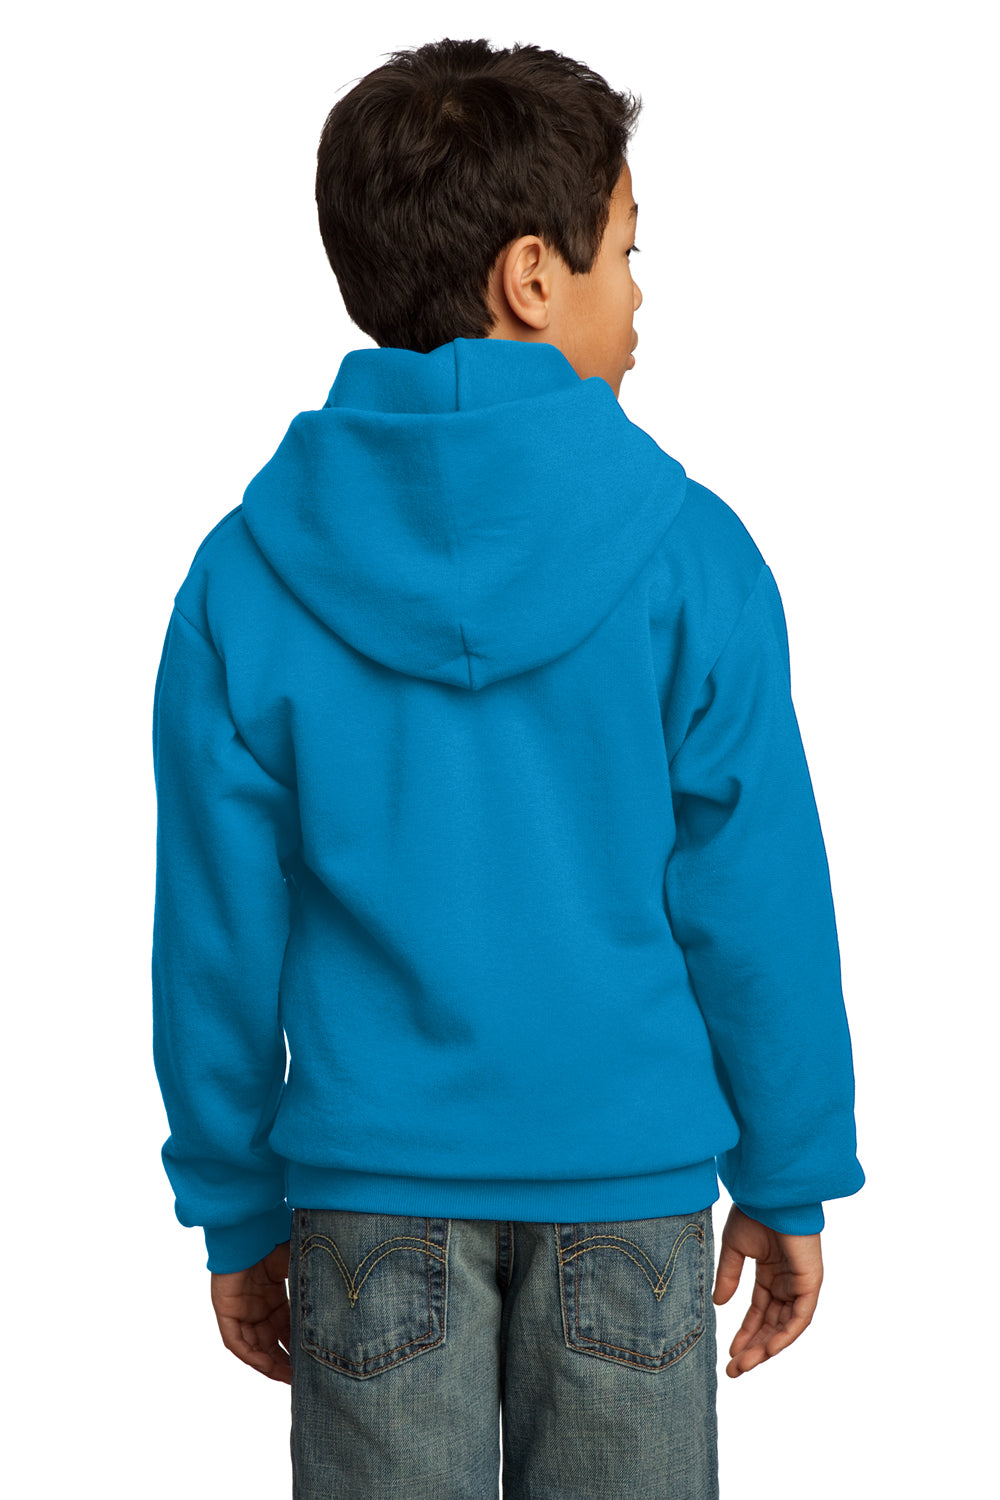 Port & Company PC90YH Youth Core Fleece Hooded Sweatshirt Hoodie Sapphire Blue Back